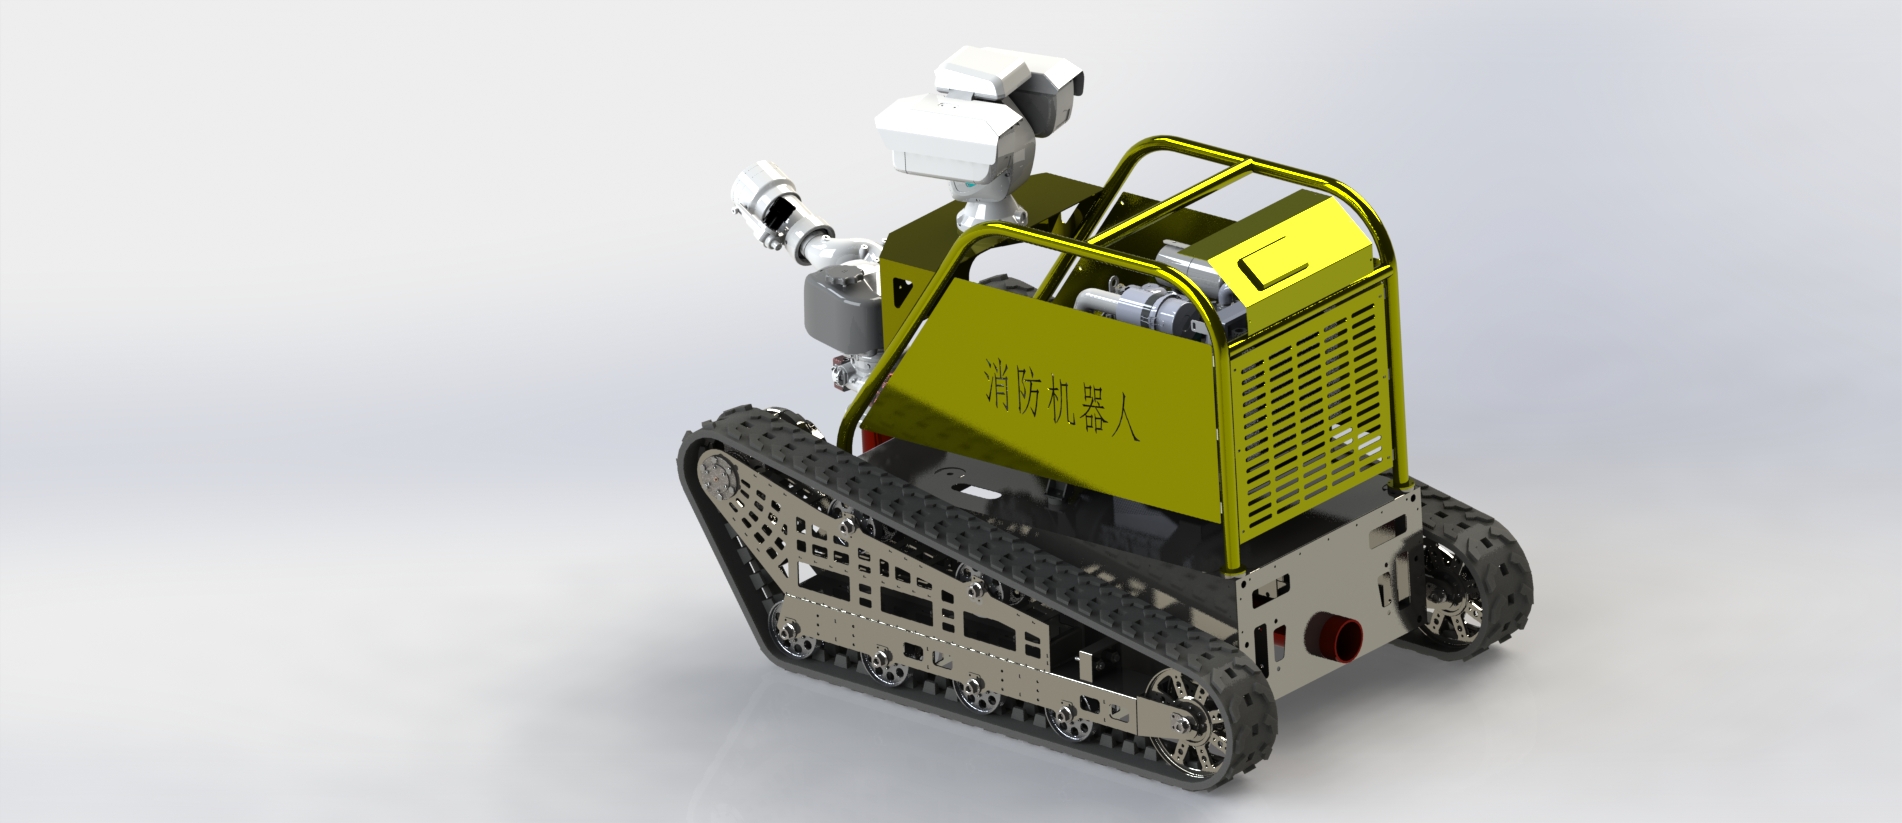 TX1800  Fire crawler robot